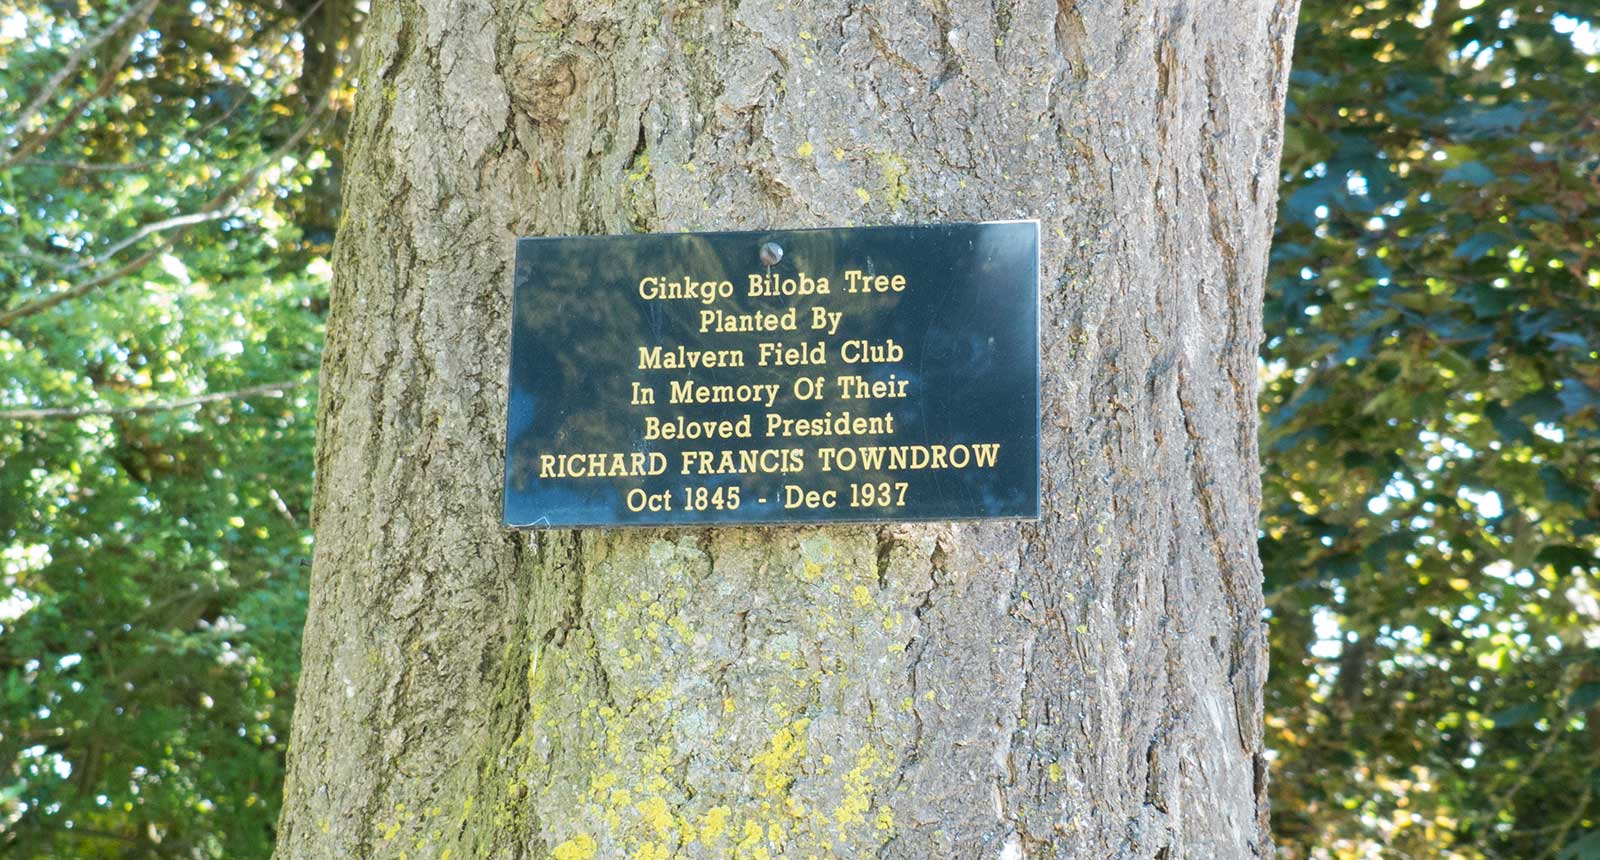 Towndrow plaque